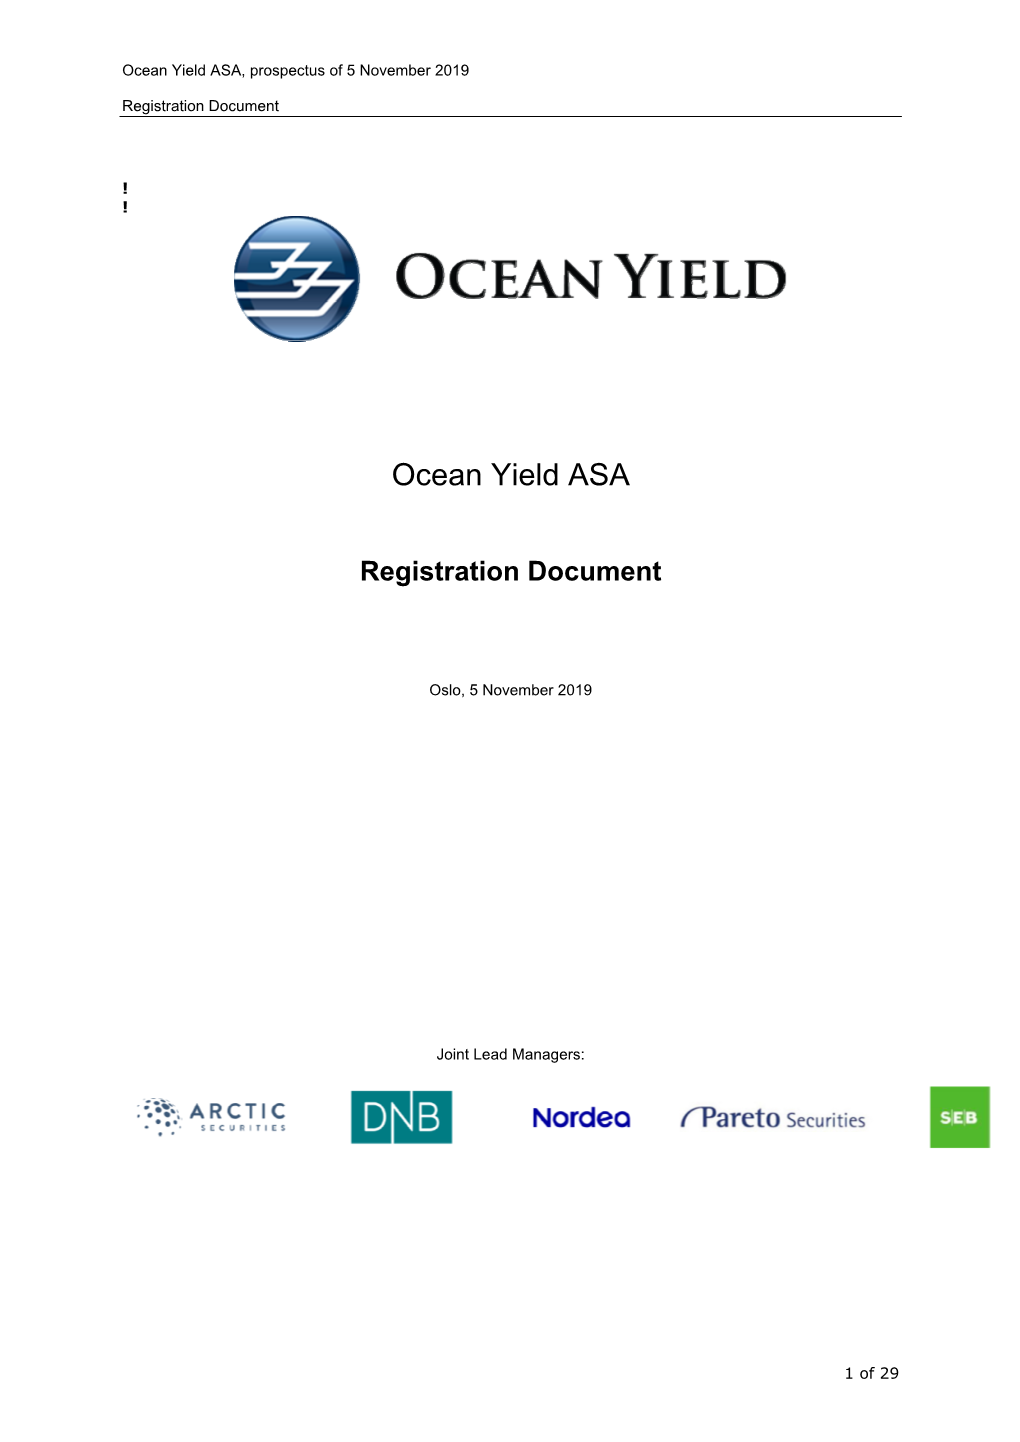 Ocean Yield ASA, Prospectus of 5 November 2019